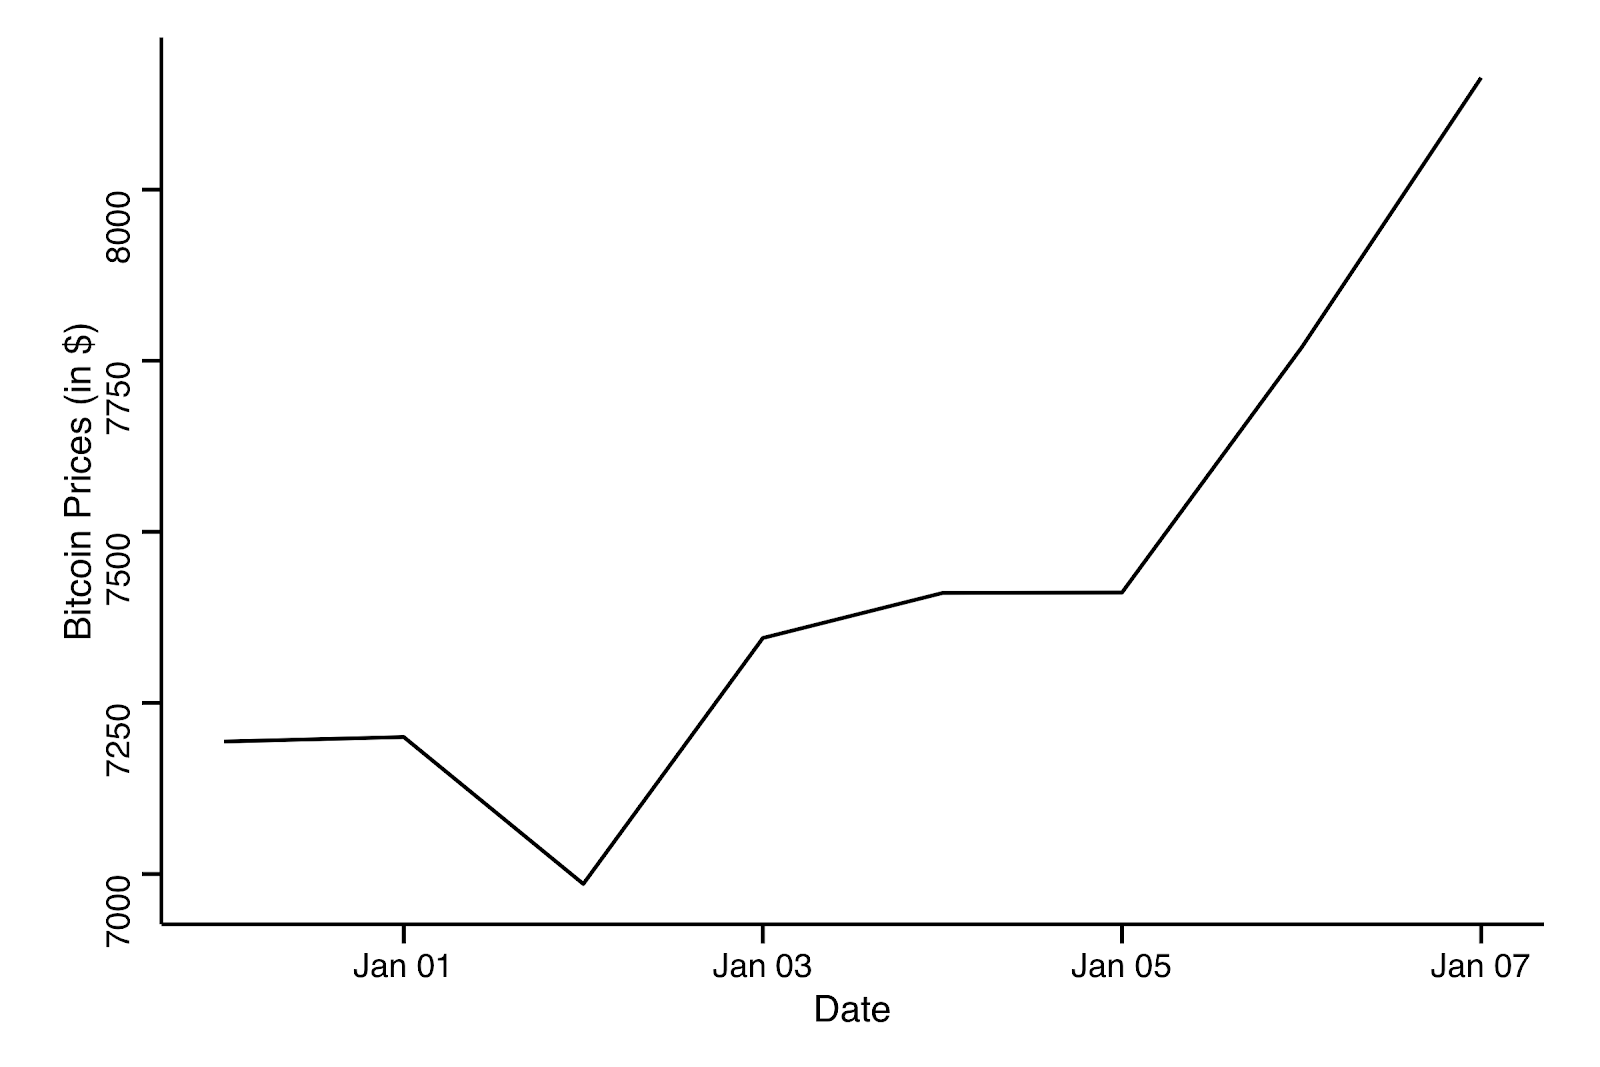 Figure 2: Bitcoin’s Price in the last 7 days. Data source: Coinmarketcap